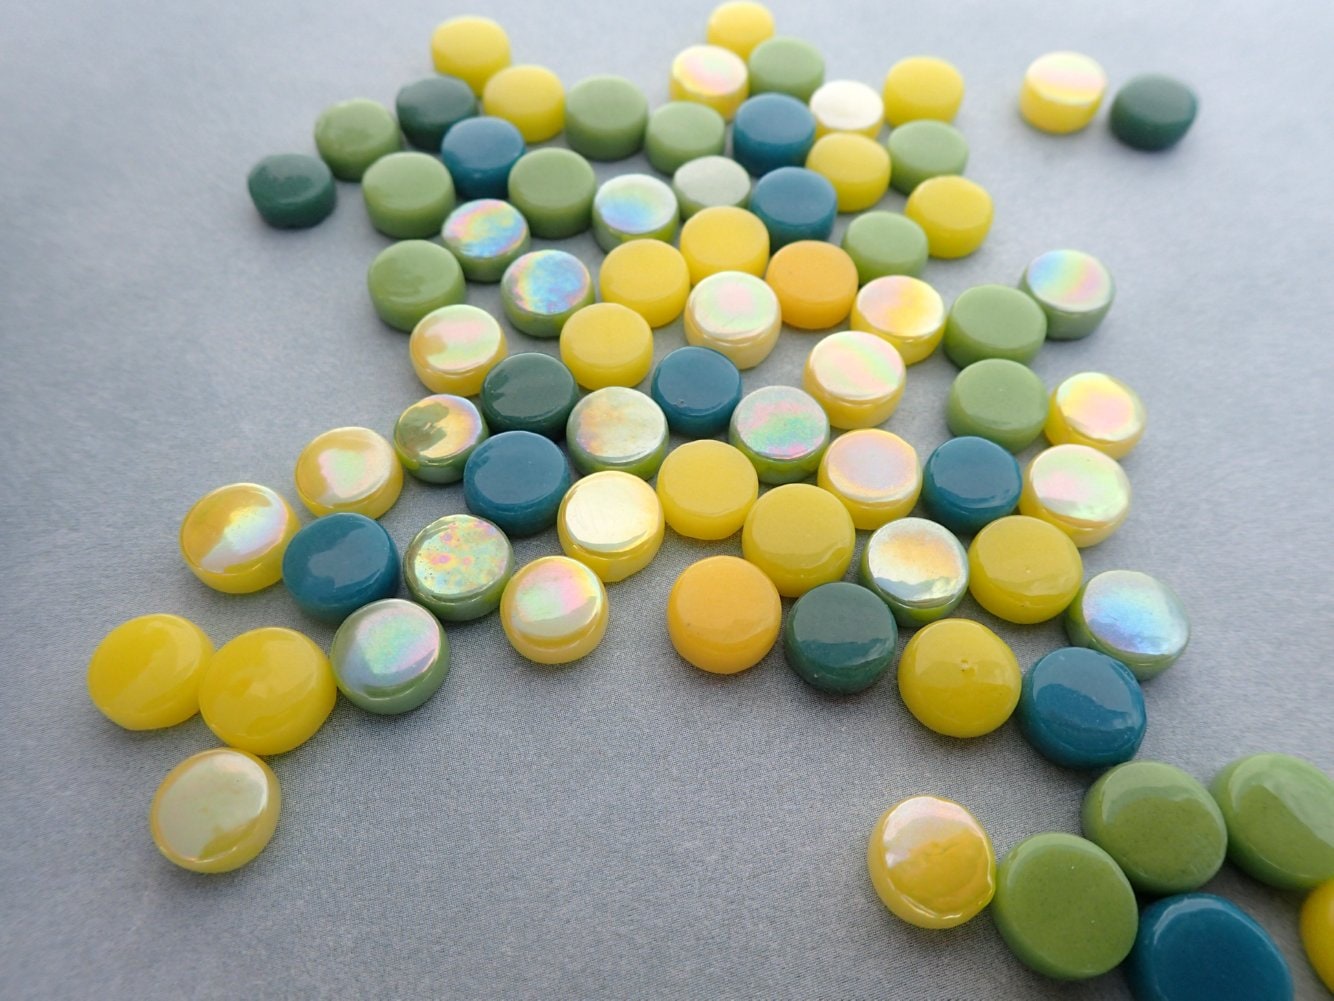 Summer Fields Mix MINI Glass Drops Mosaic Tiles - 50 grams - Over 100 Tiles